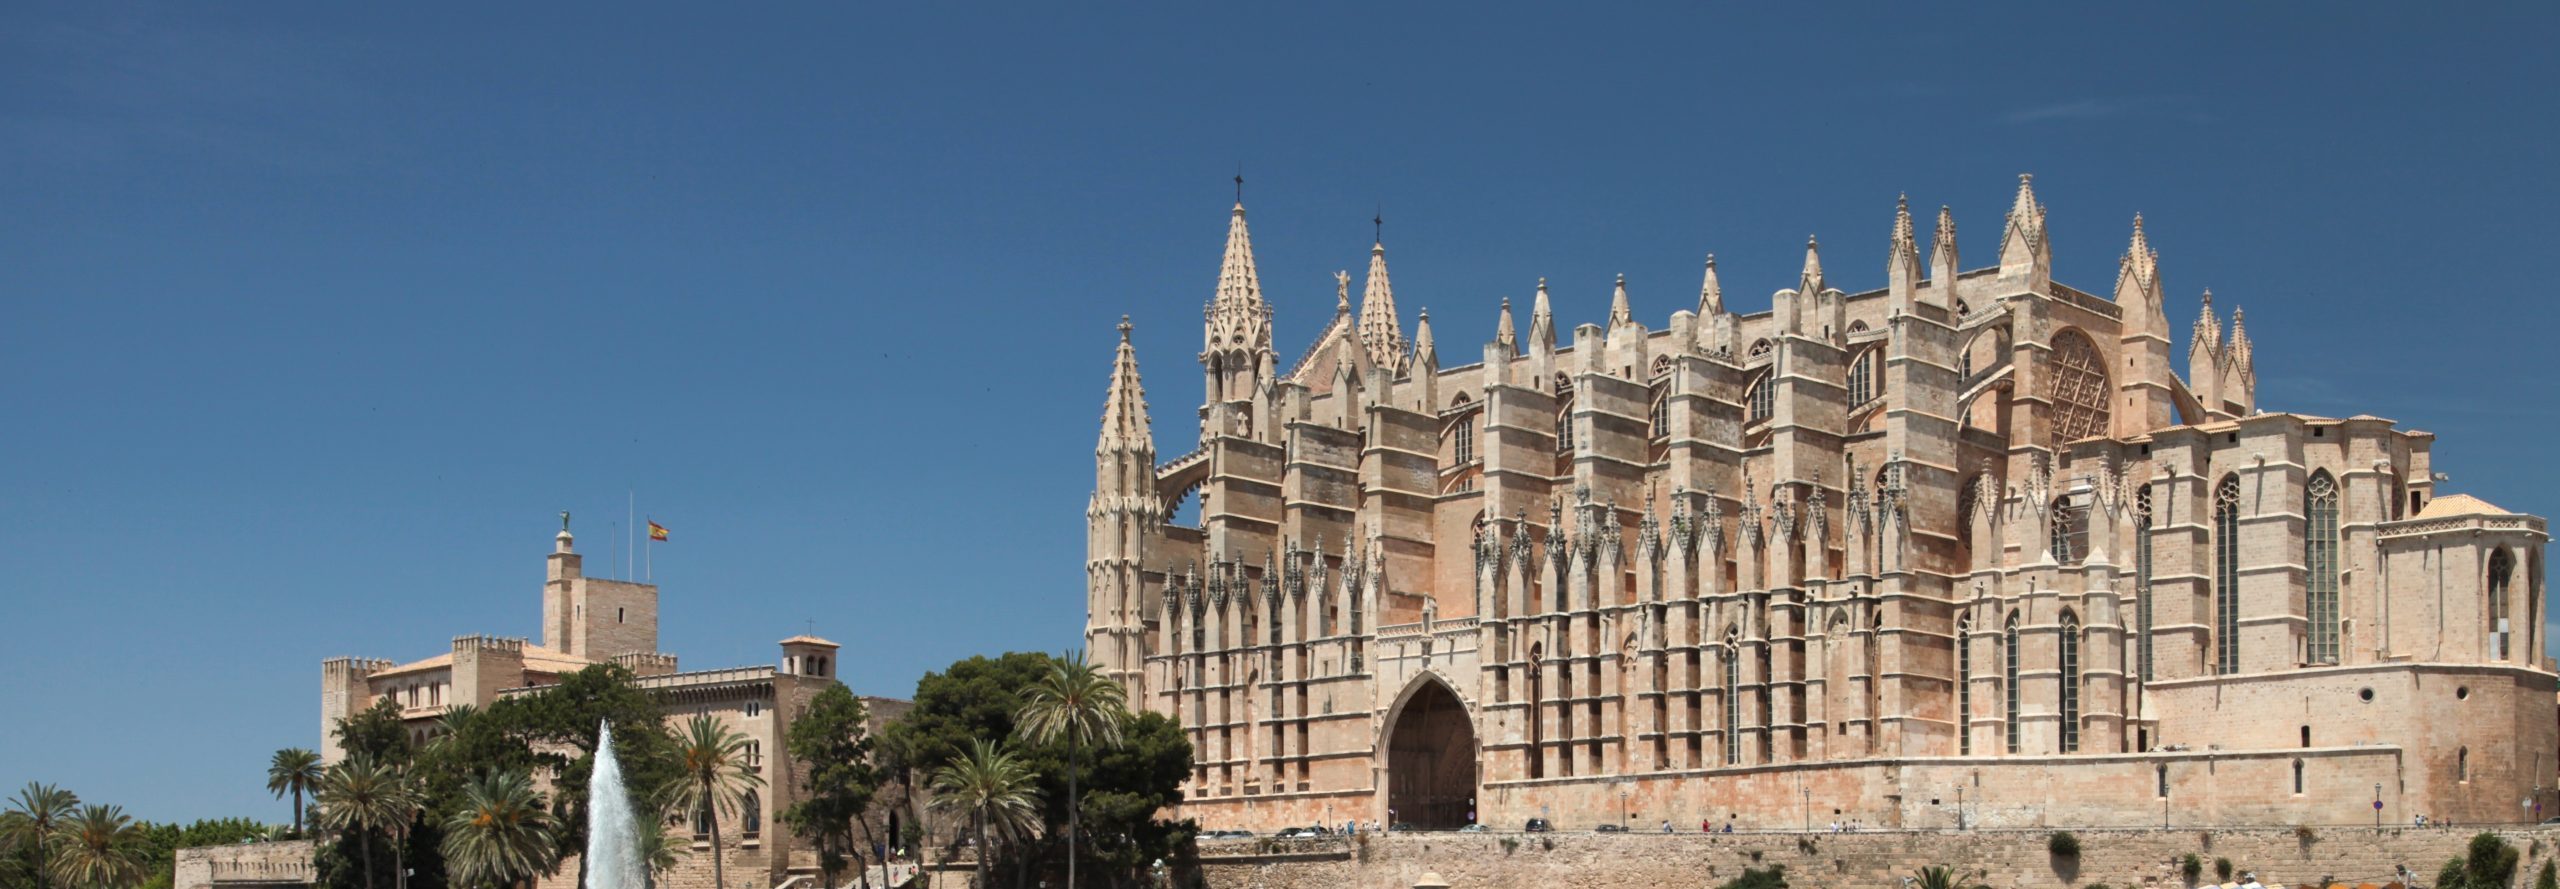 mallorca-cathedral